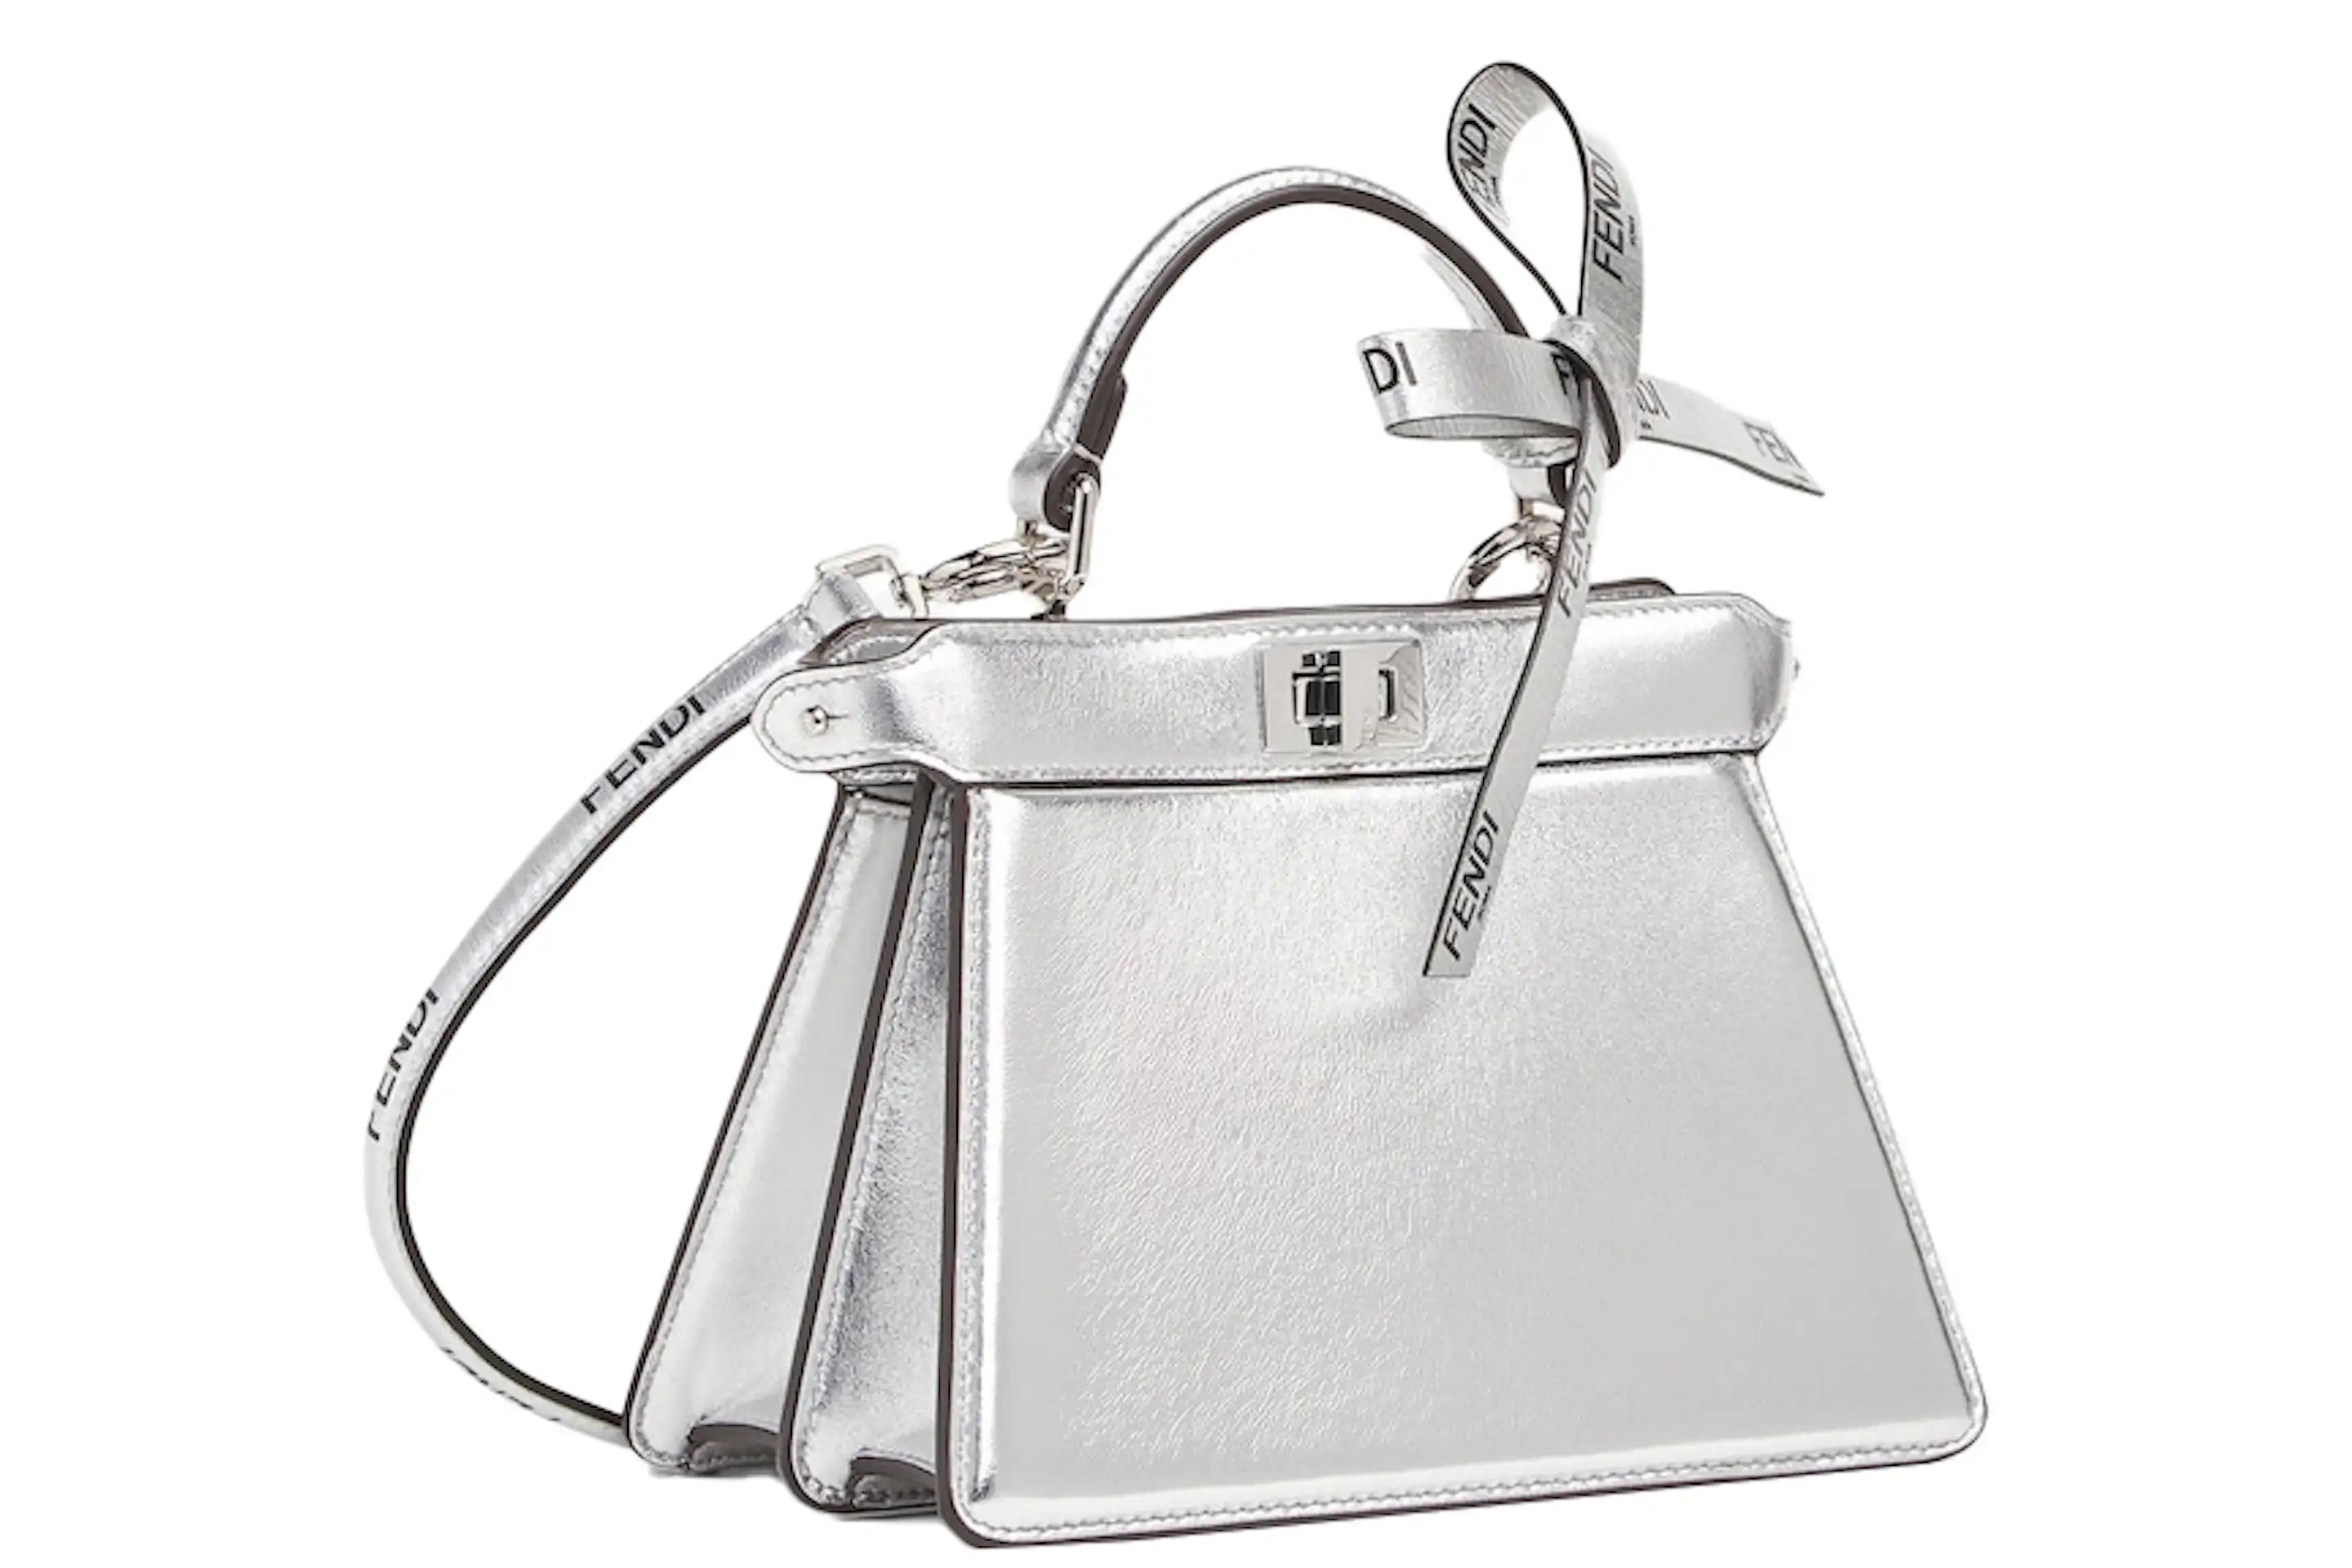 Fendi by Marc Jacobs Peekaboo ISeeU Petite Silver Leather Bag in ...